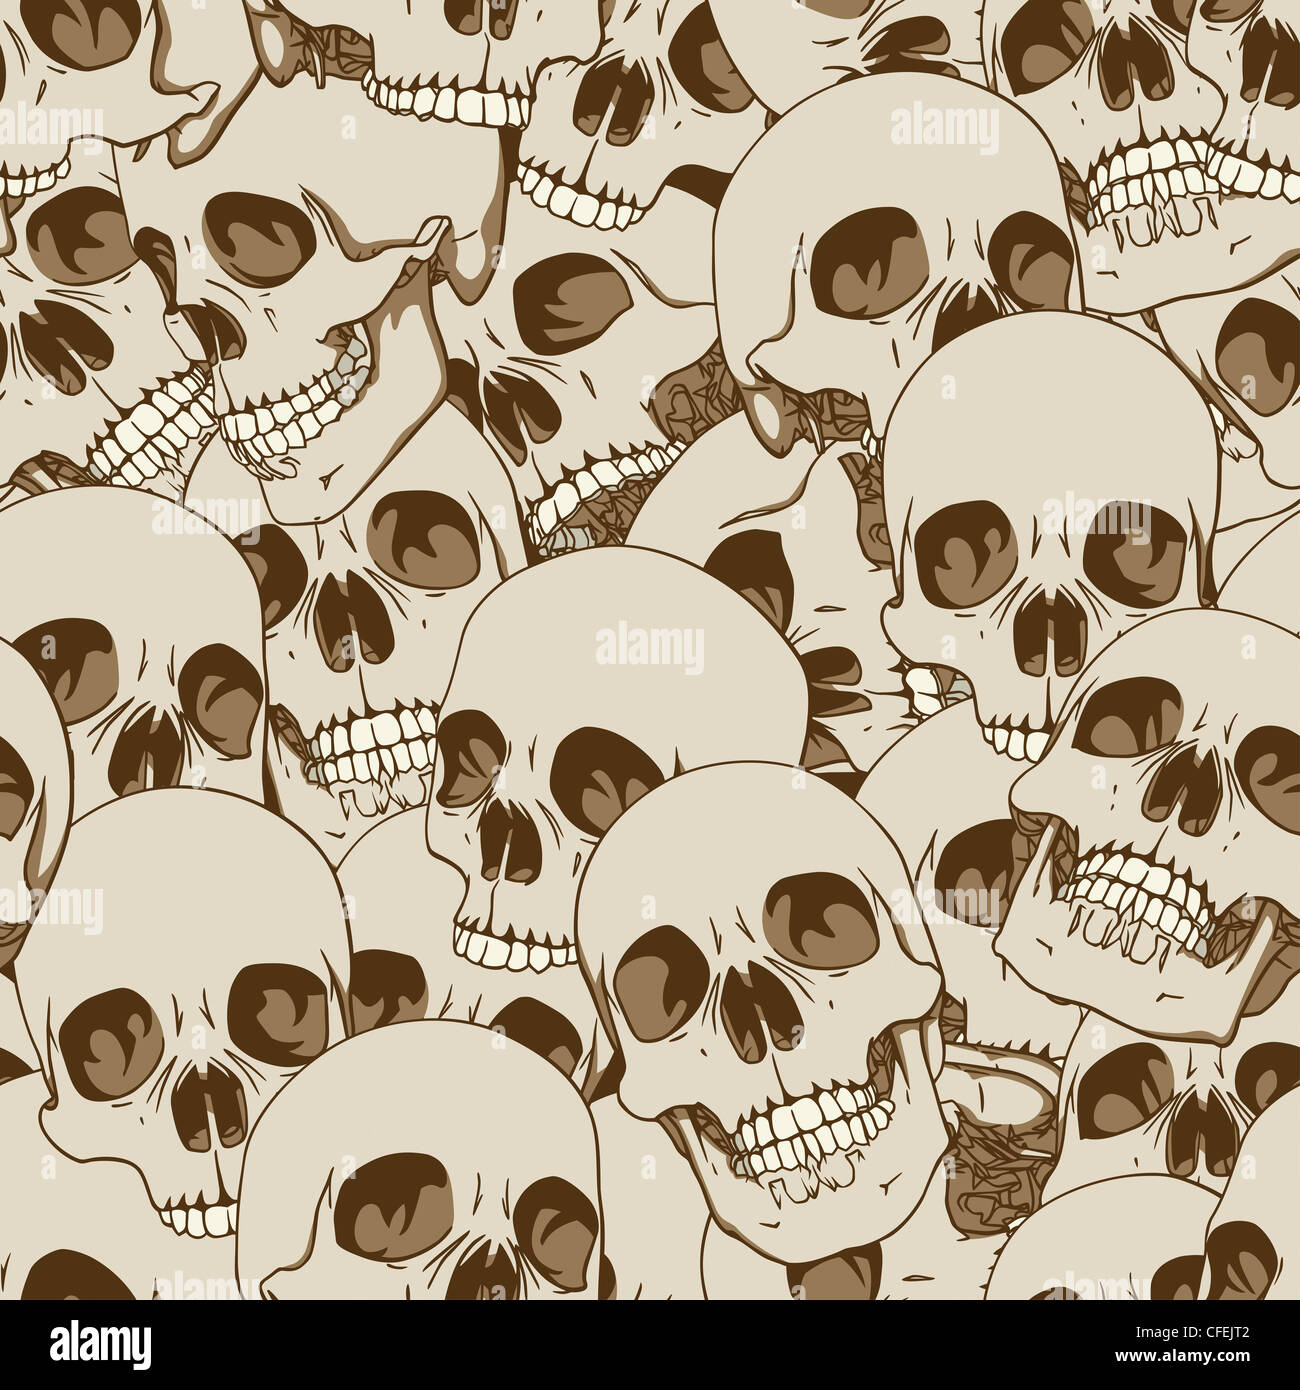 Human skulls seamless background Stock Photo